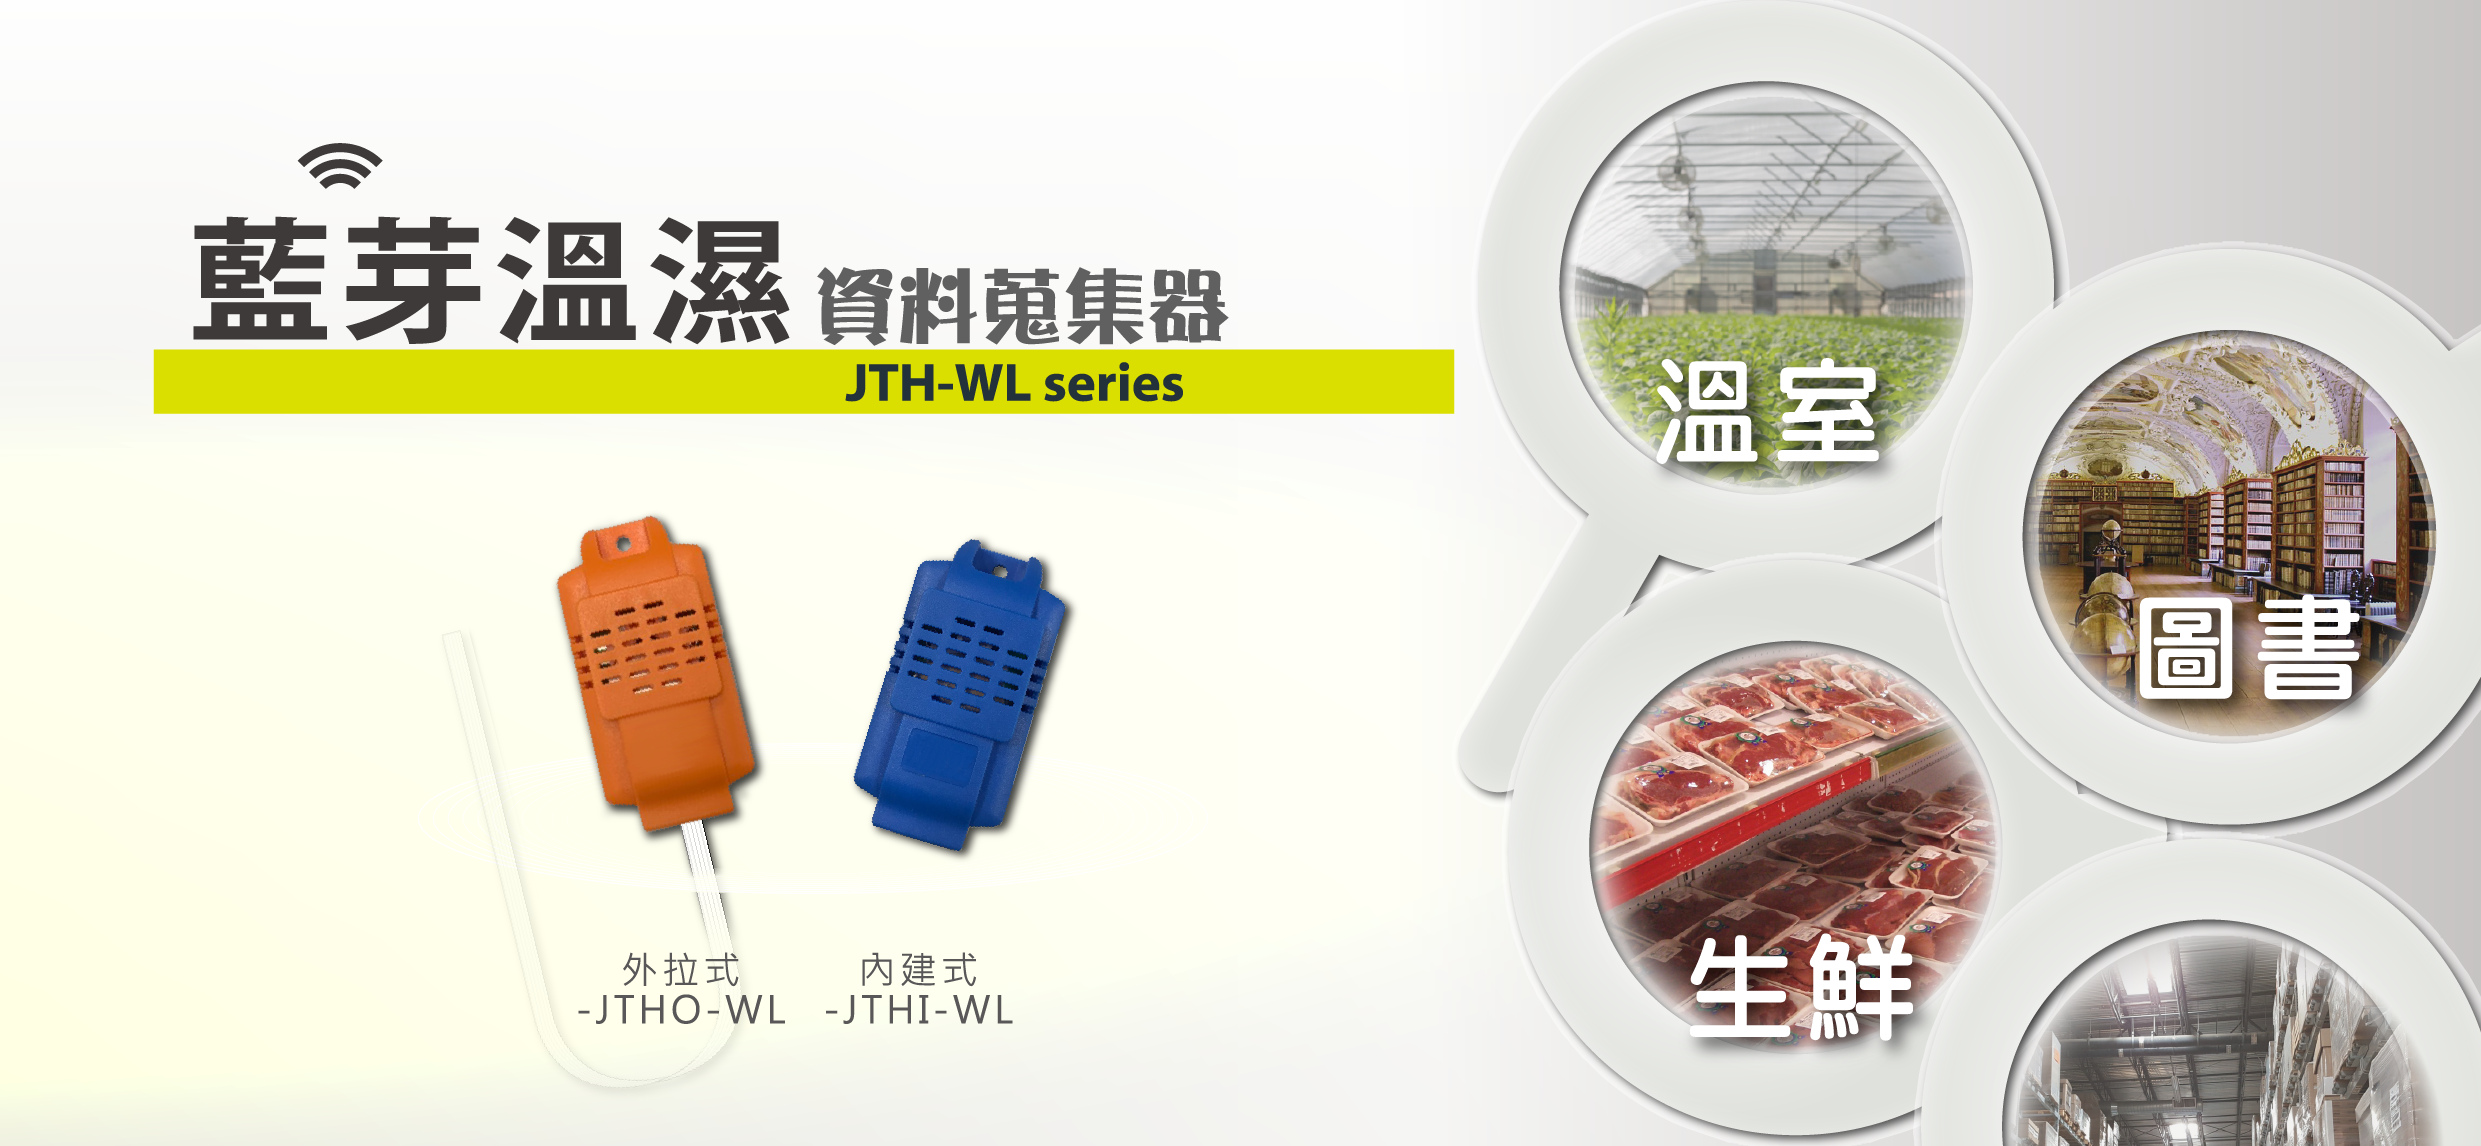 【JTH-WL series】藍芽溫濕資料蒐集器，量測現場環境溫度與濕度，於手機安裝免費APP即時顯示～久德電子！